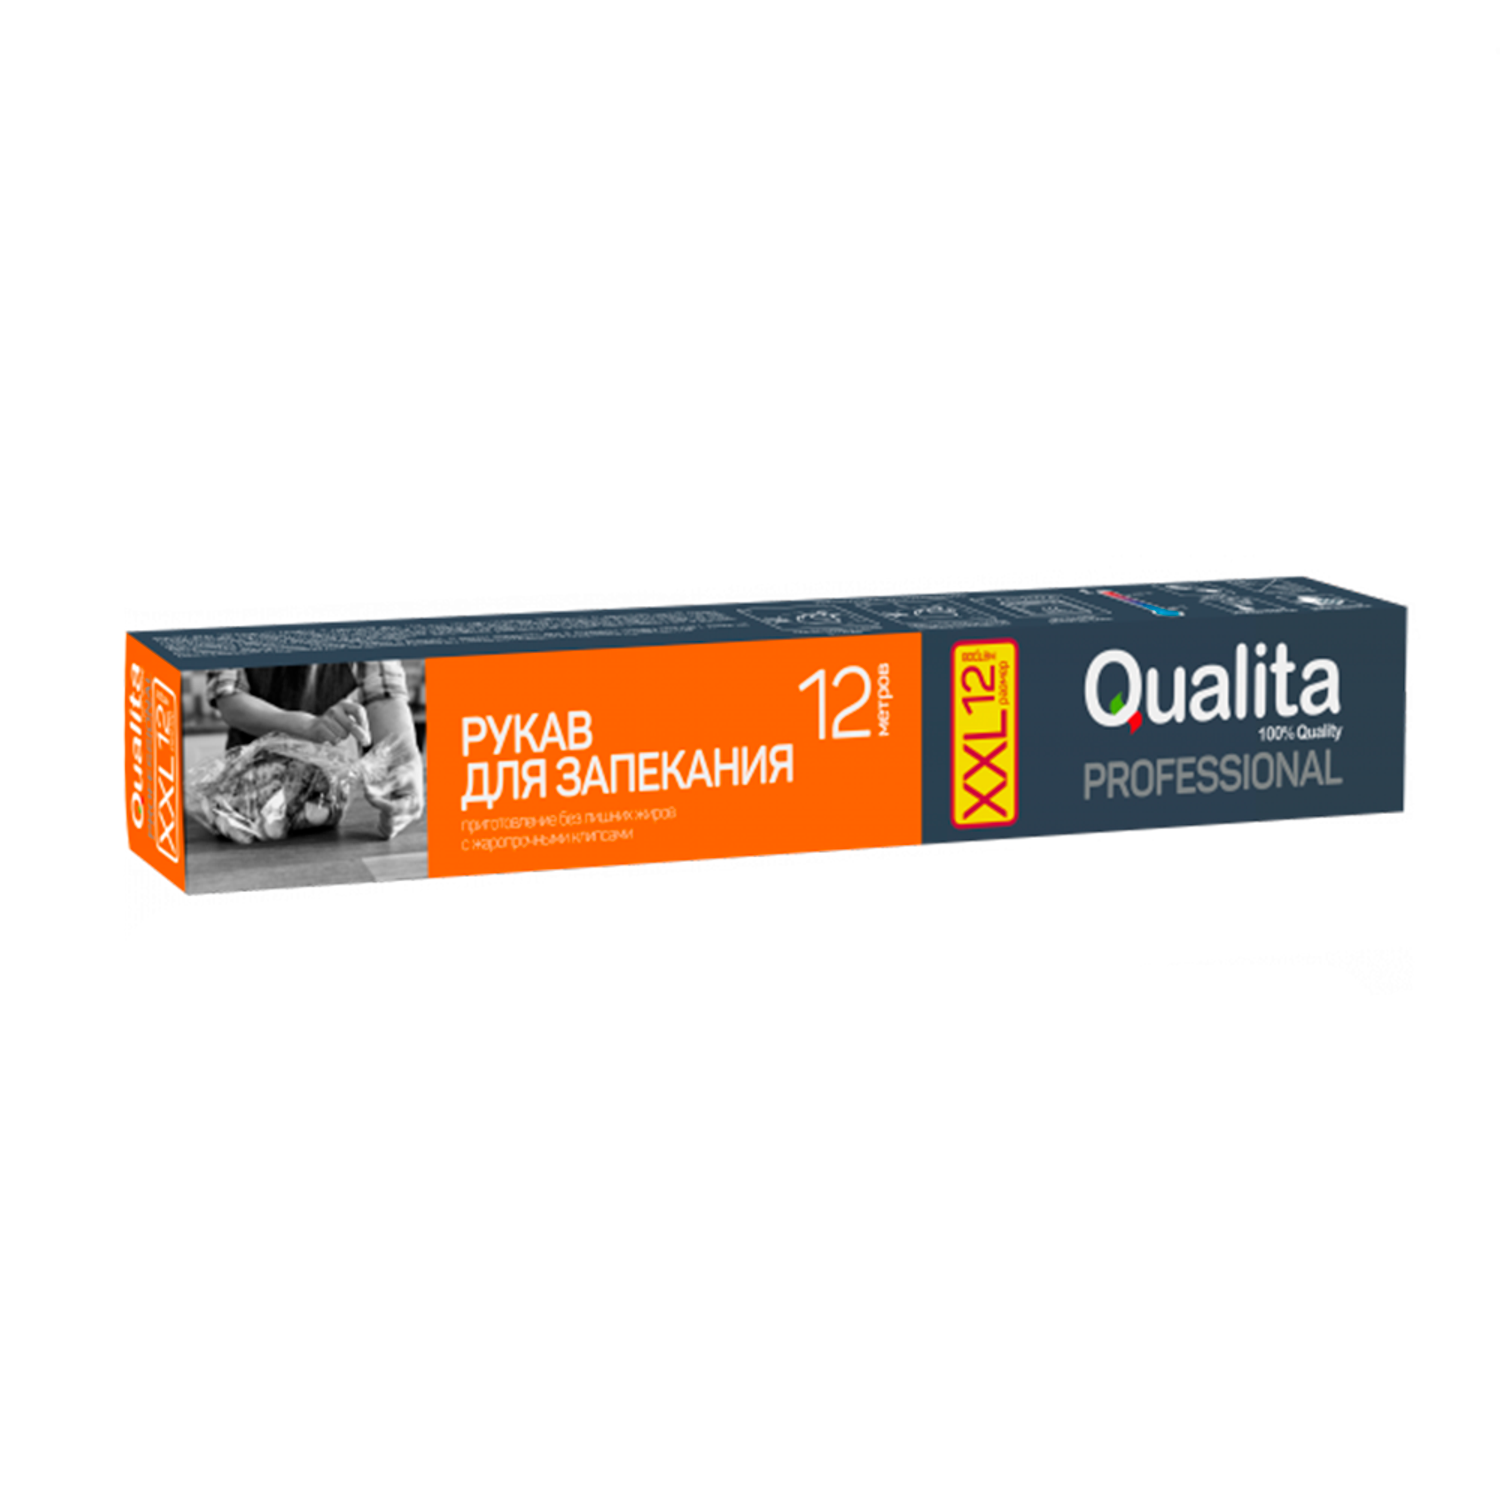 Рукав для запекания QUALITA Professional 10+2м в коробке - фото 2